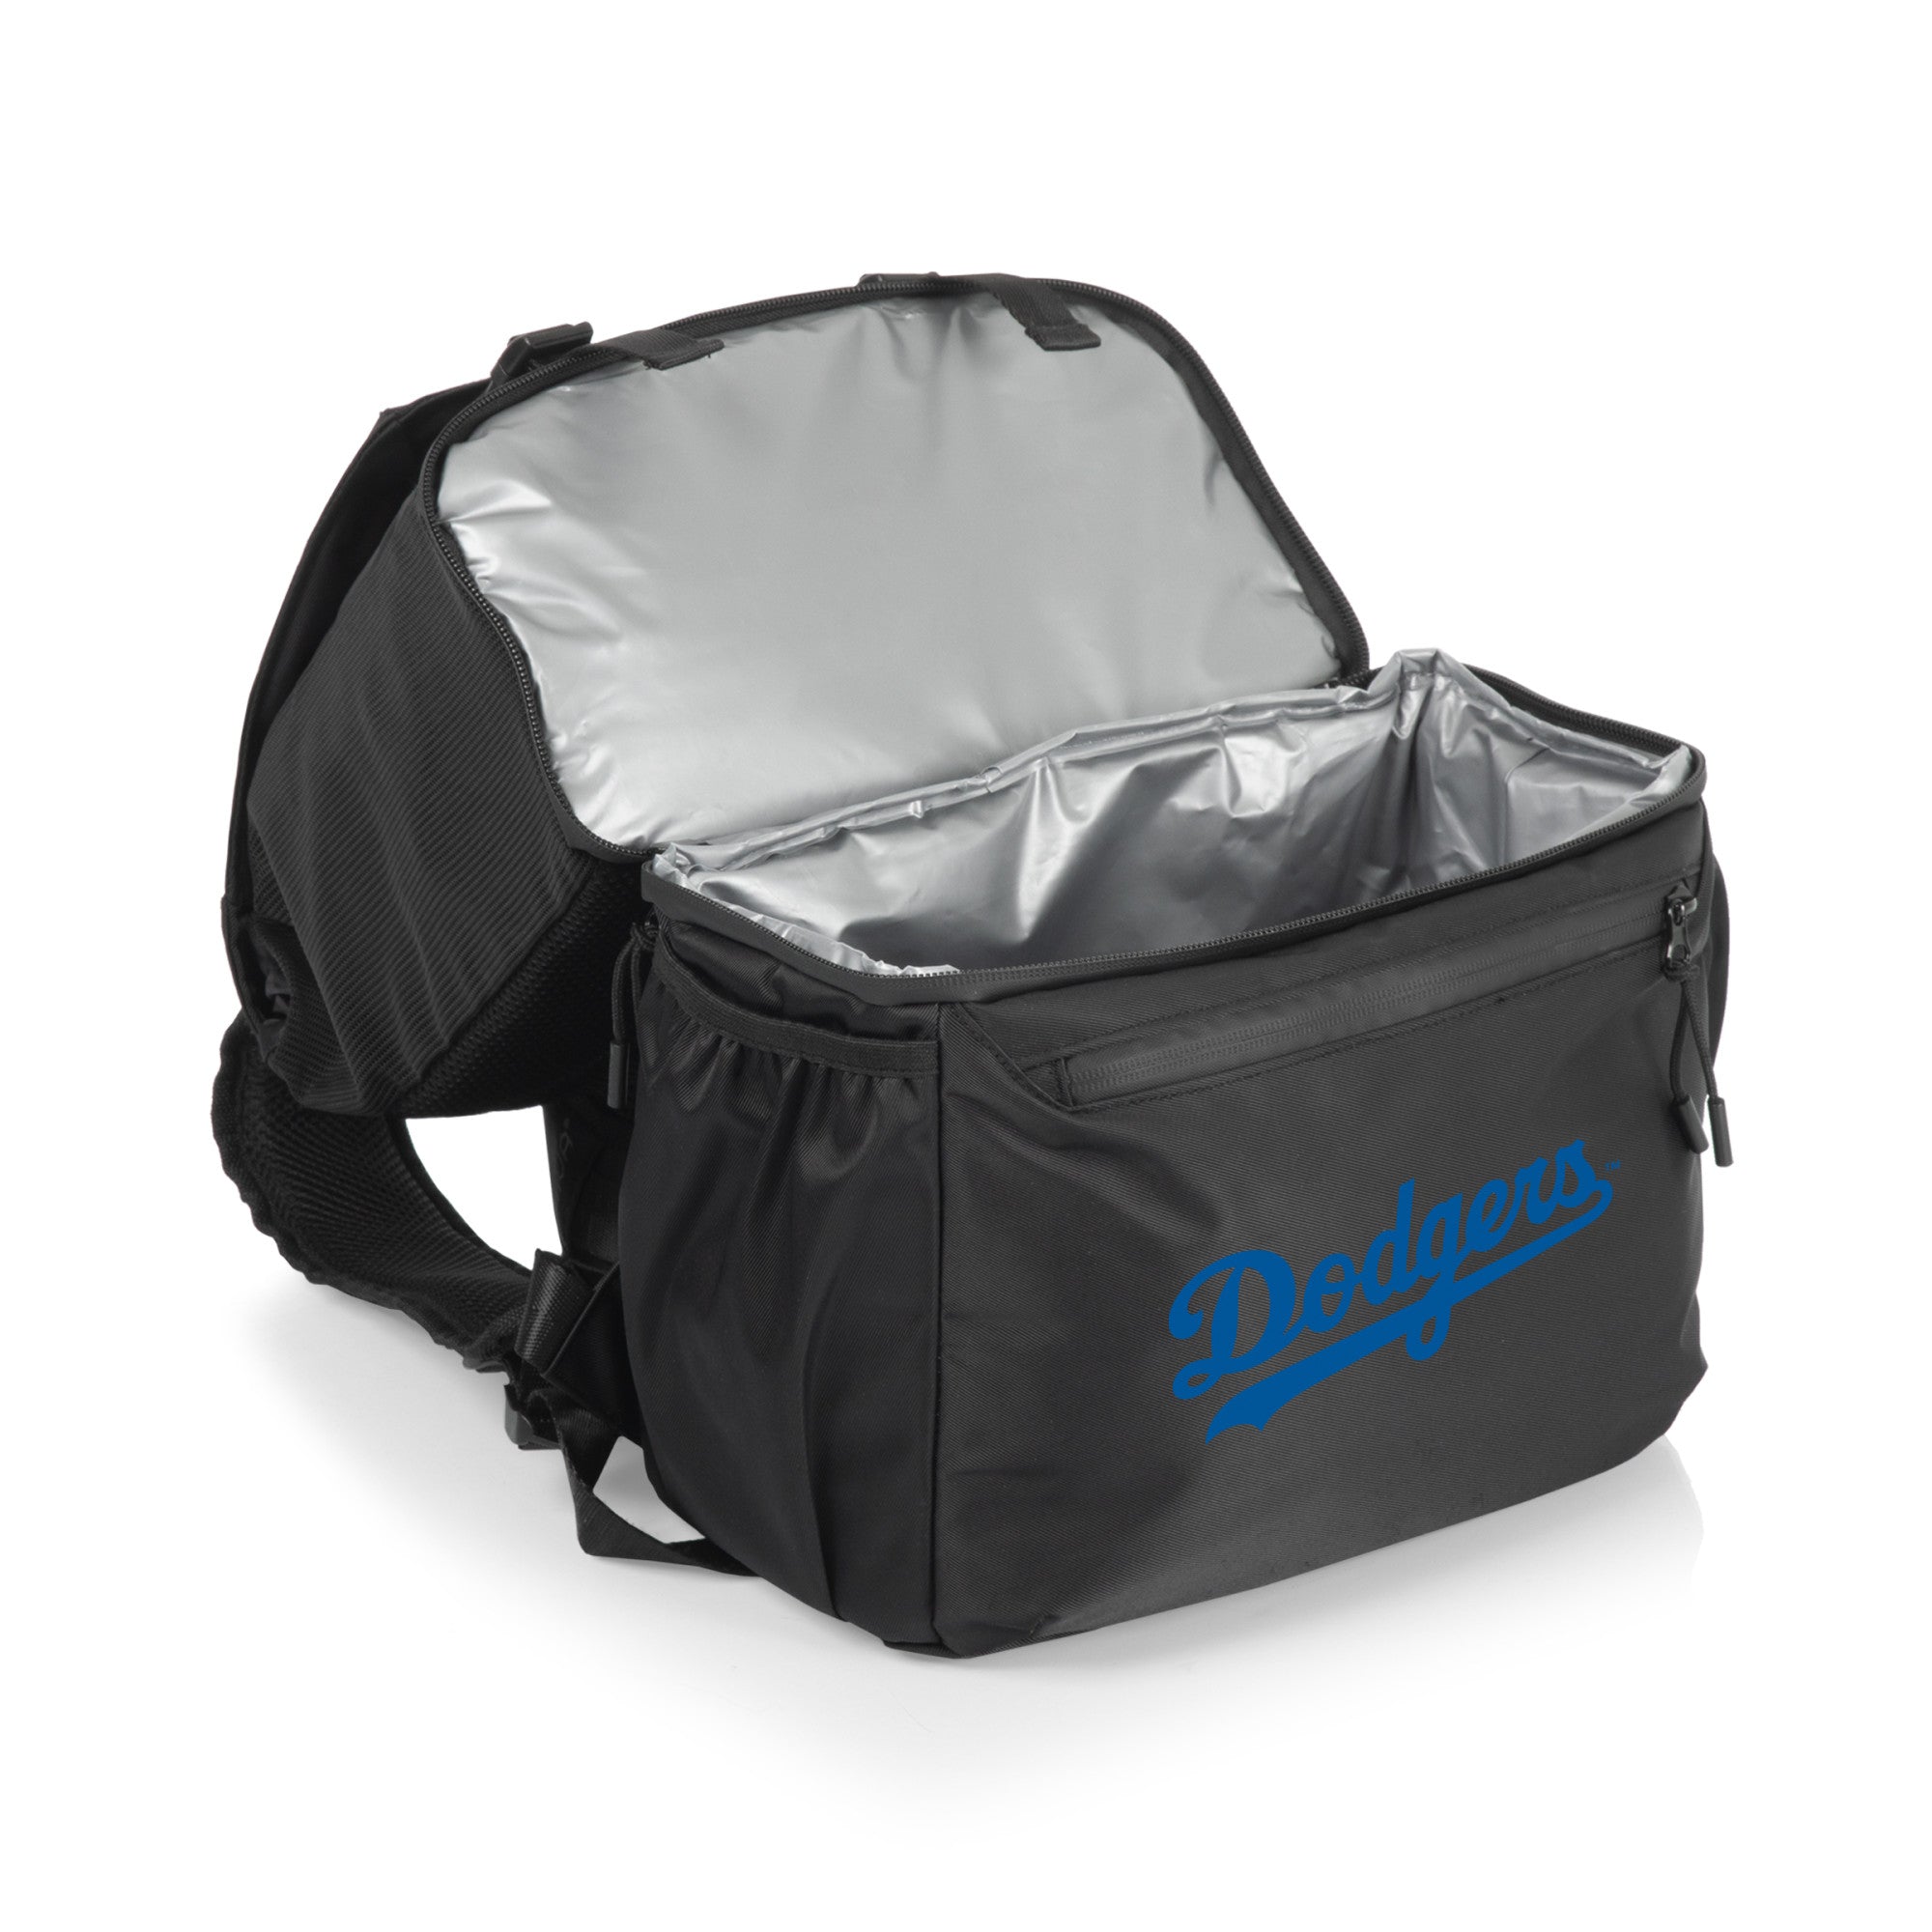 Los Angeles Dodgers - Tarana Backpack Cooler